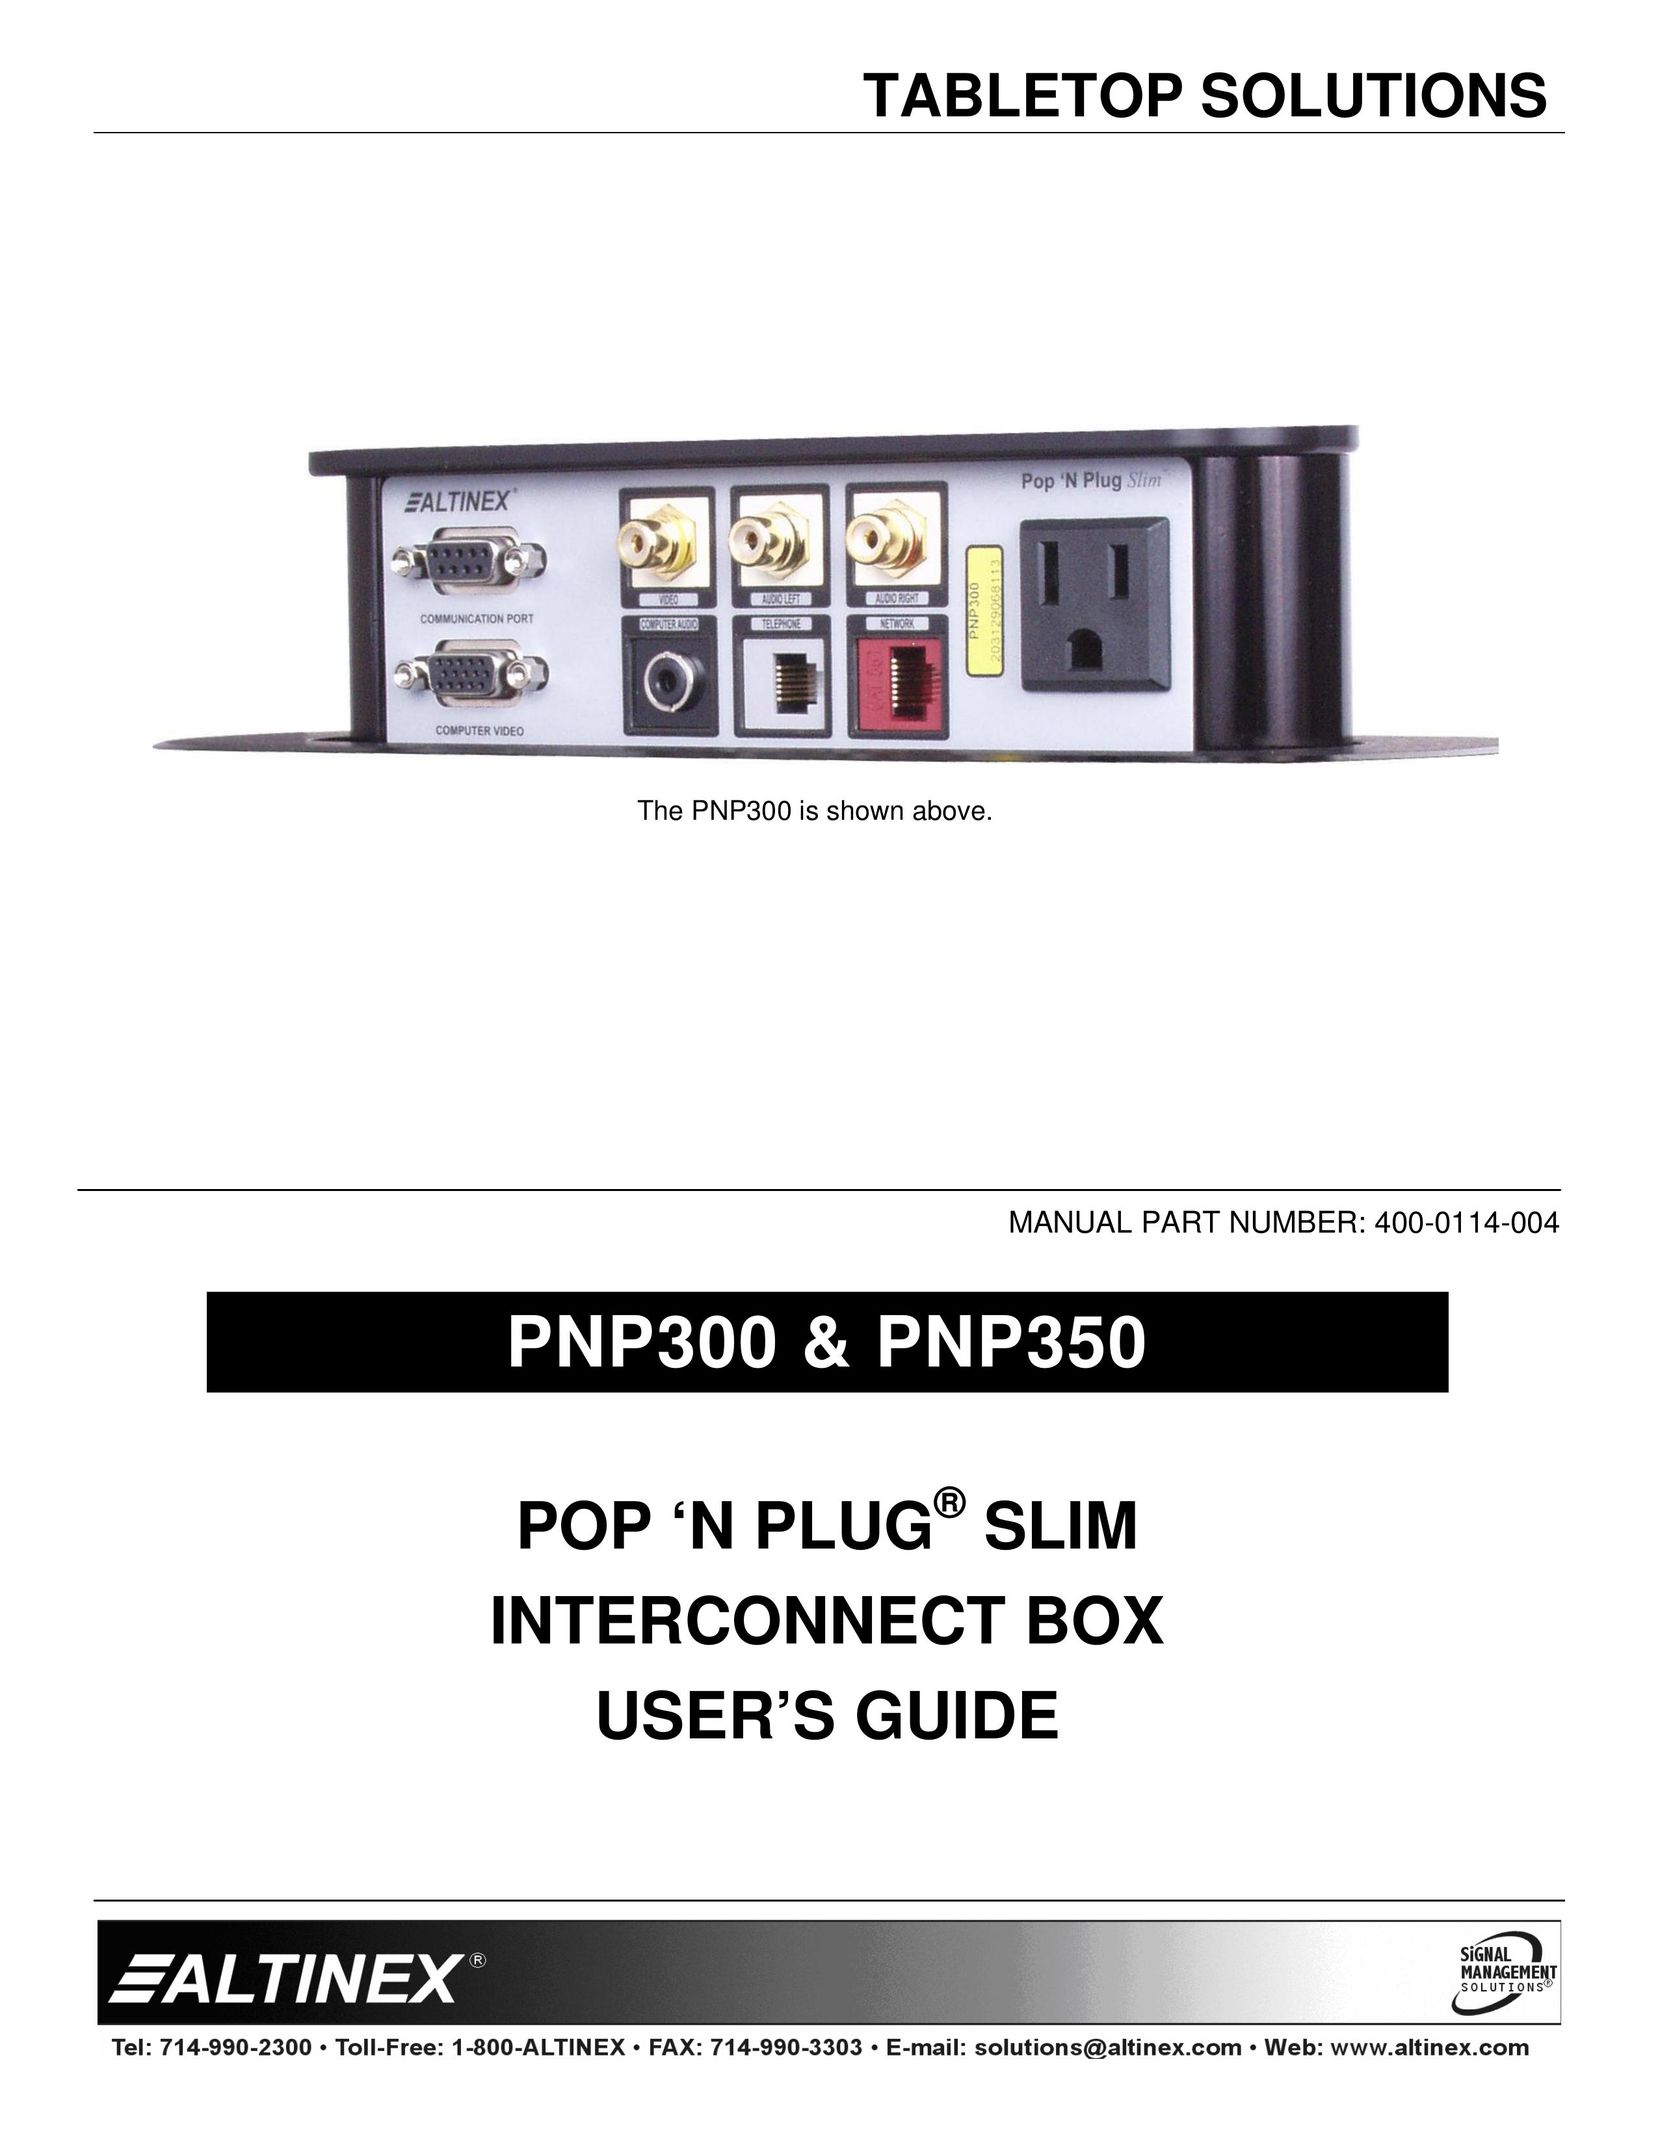 Altinex PNP300 Network Card User Manual